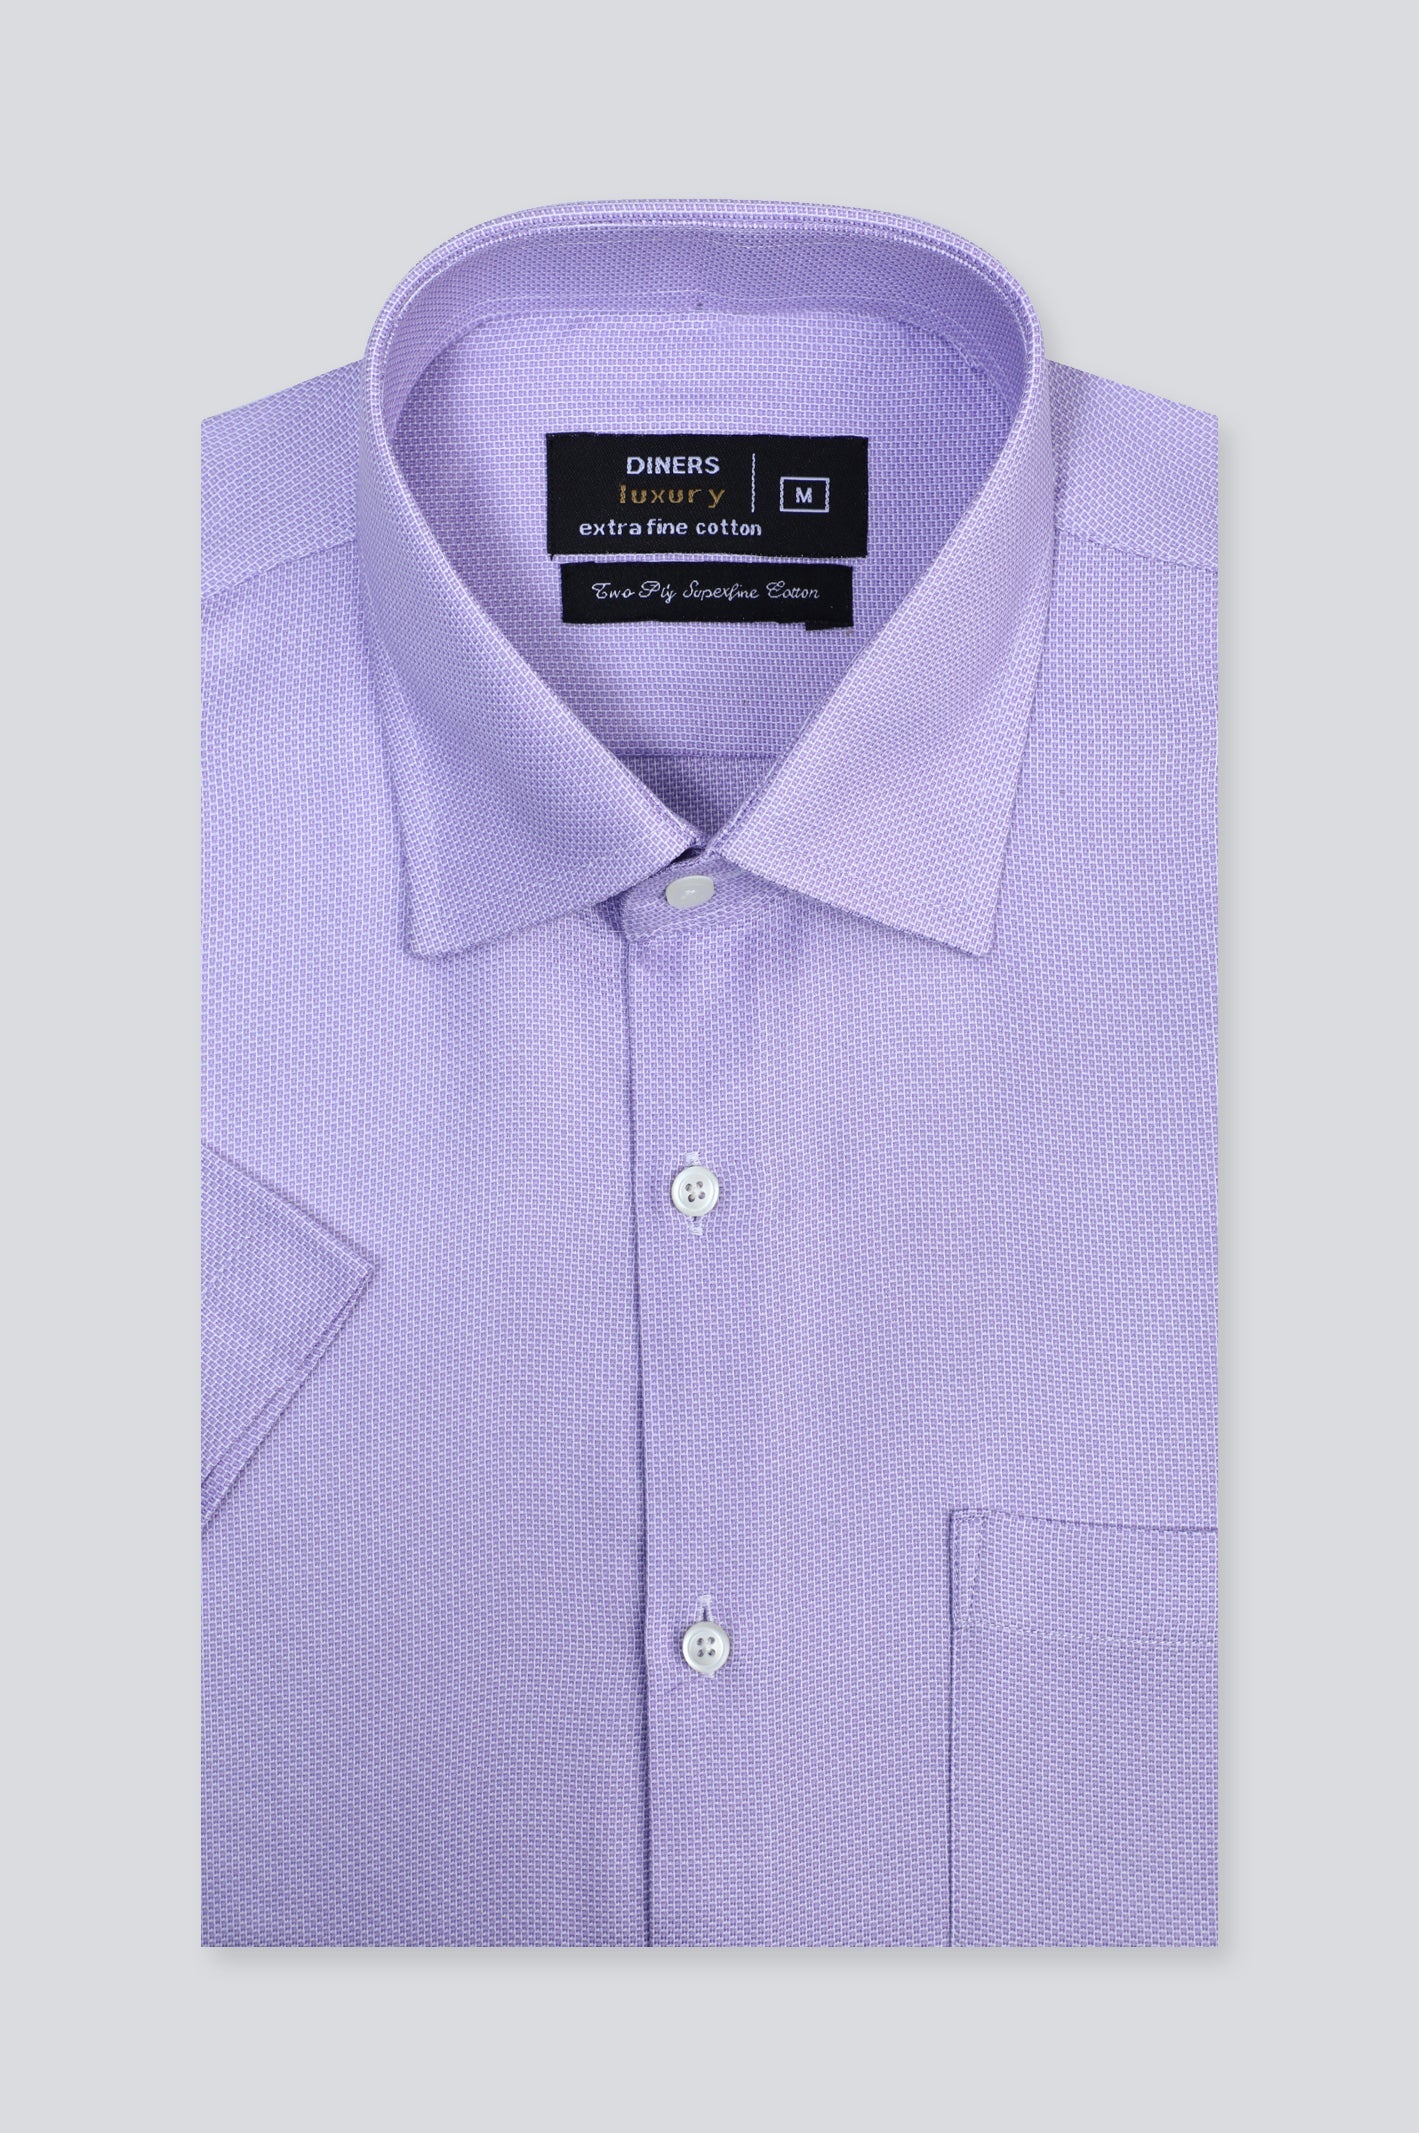 Pink Textured Formal Luxury Shirt (Half Sleeves) - Diners